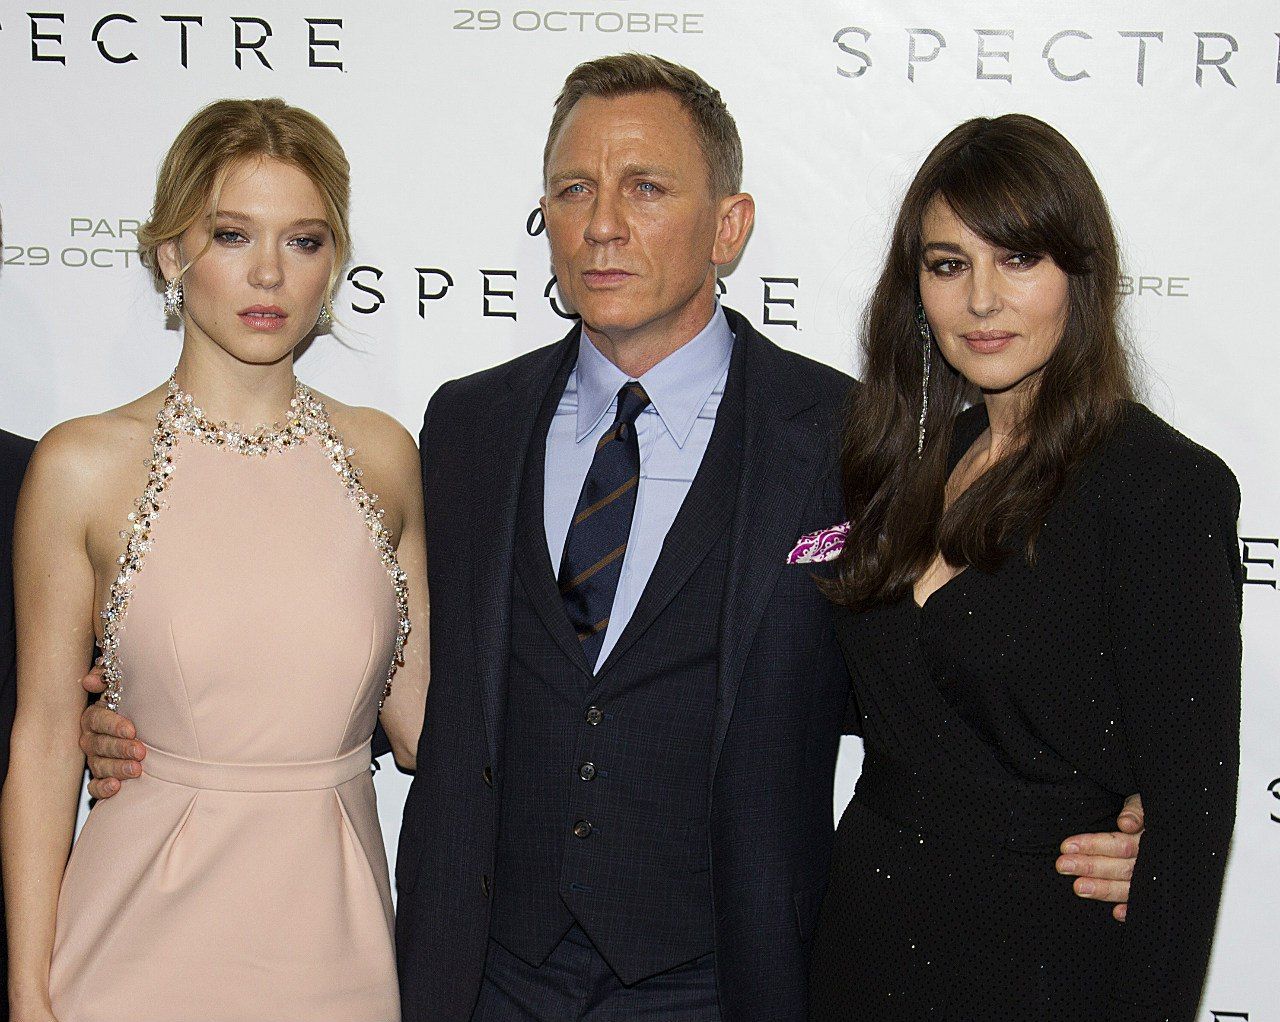 SPECTRE Premiere at Grand Rex Cinema in Paris - Léa Seydoux, Monica ...